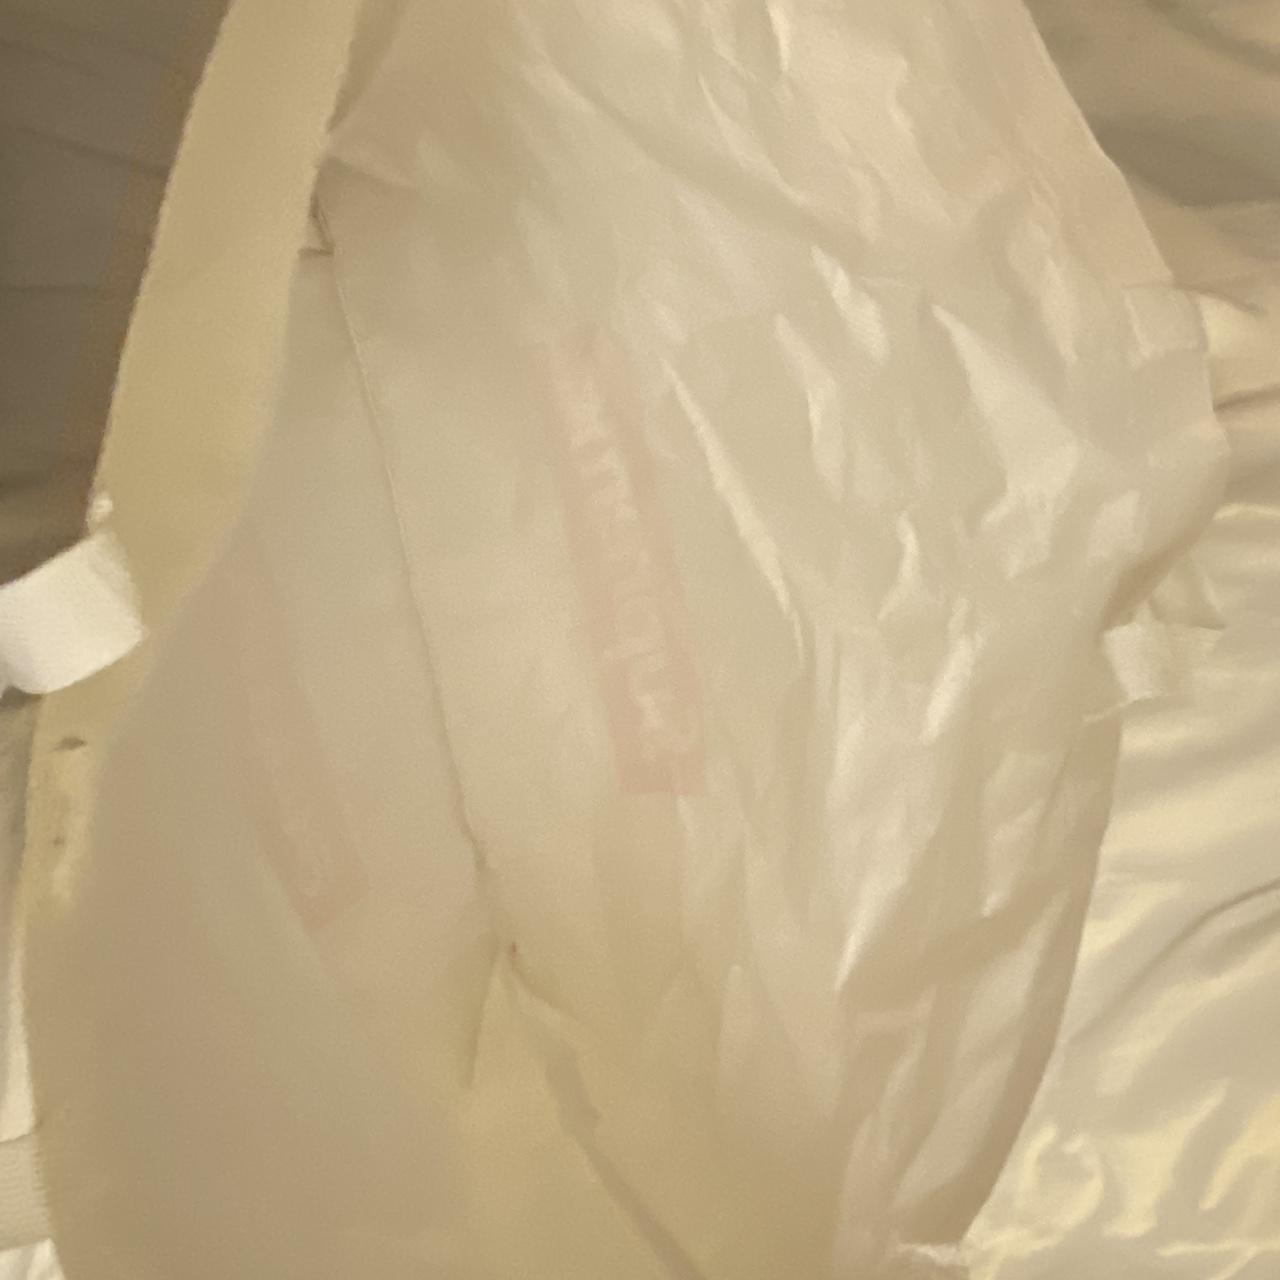 Supreme large reusable shopping bag tote Used once - Depop